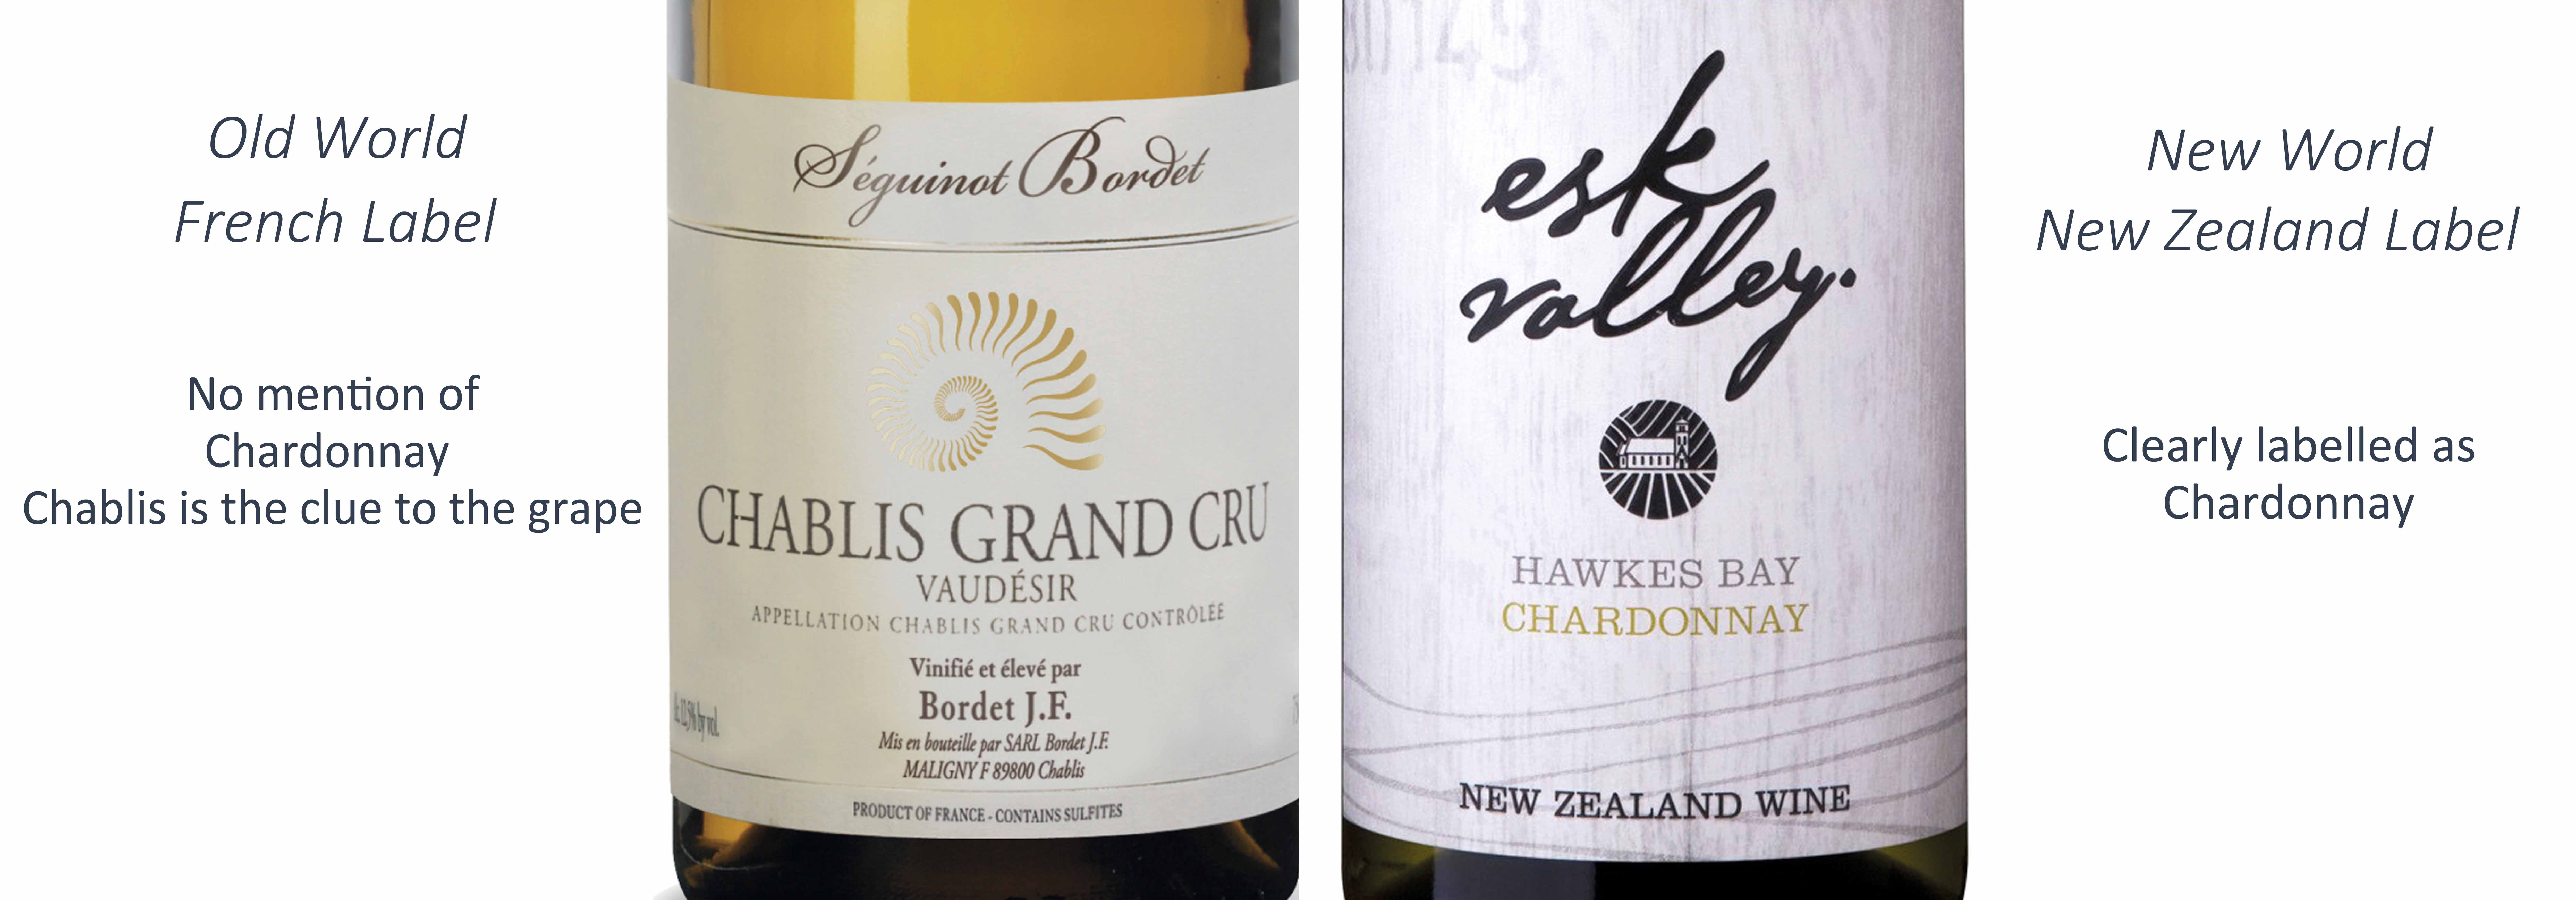 Understanding wine labels - old world vs. new world